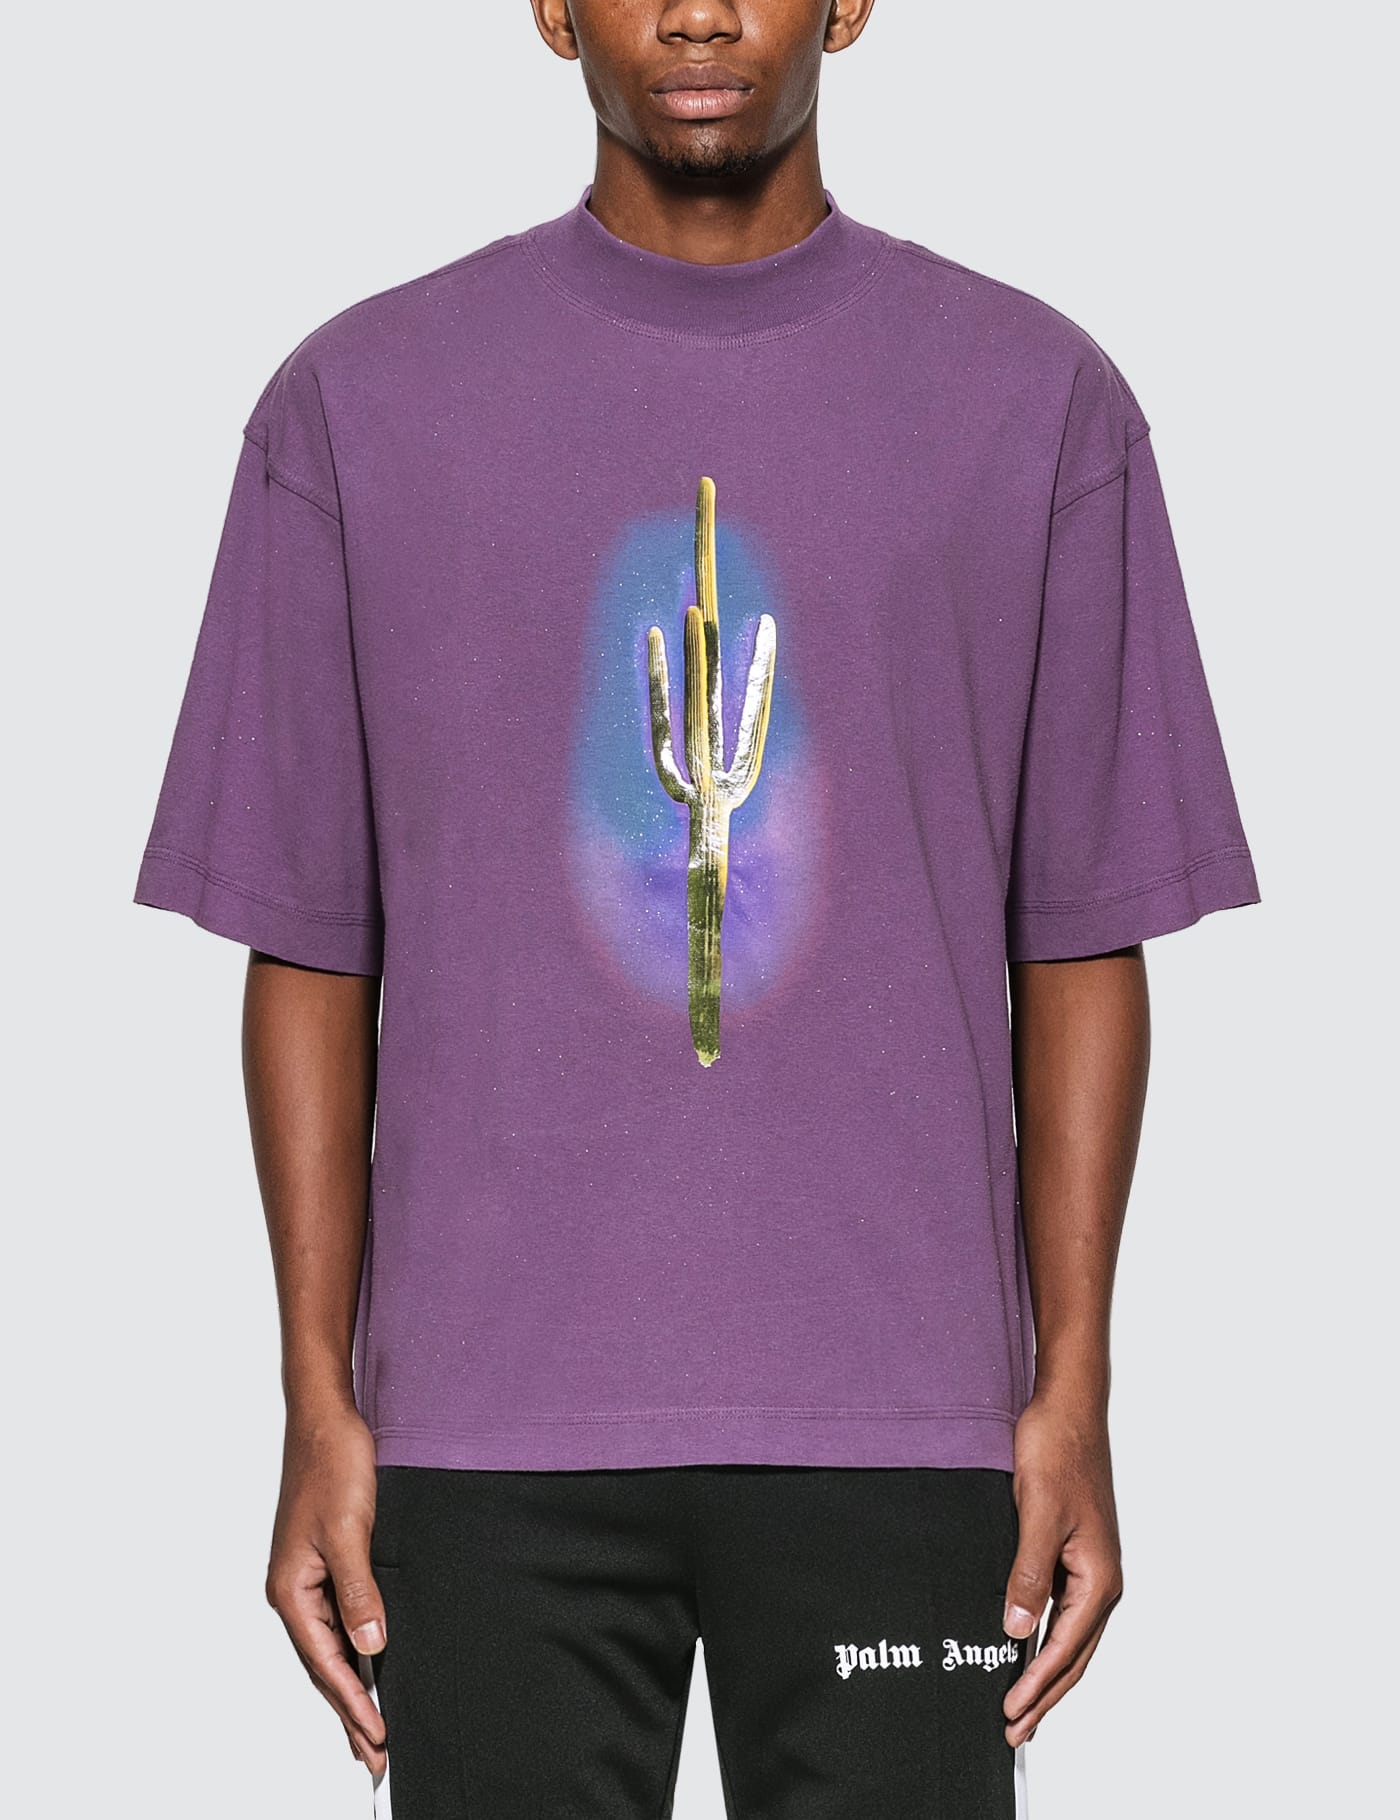 palm angels purple shirt